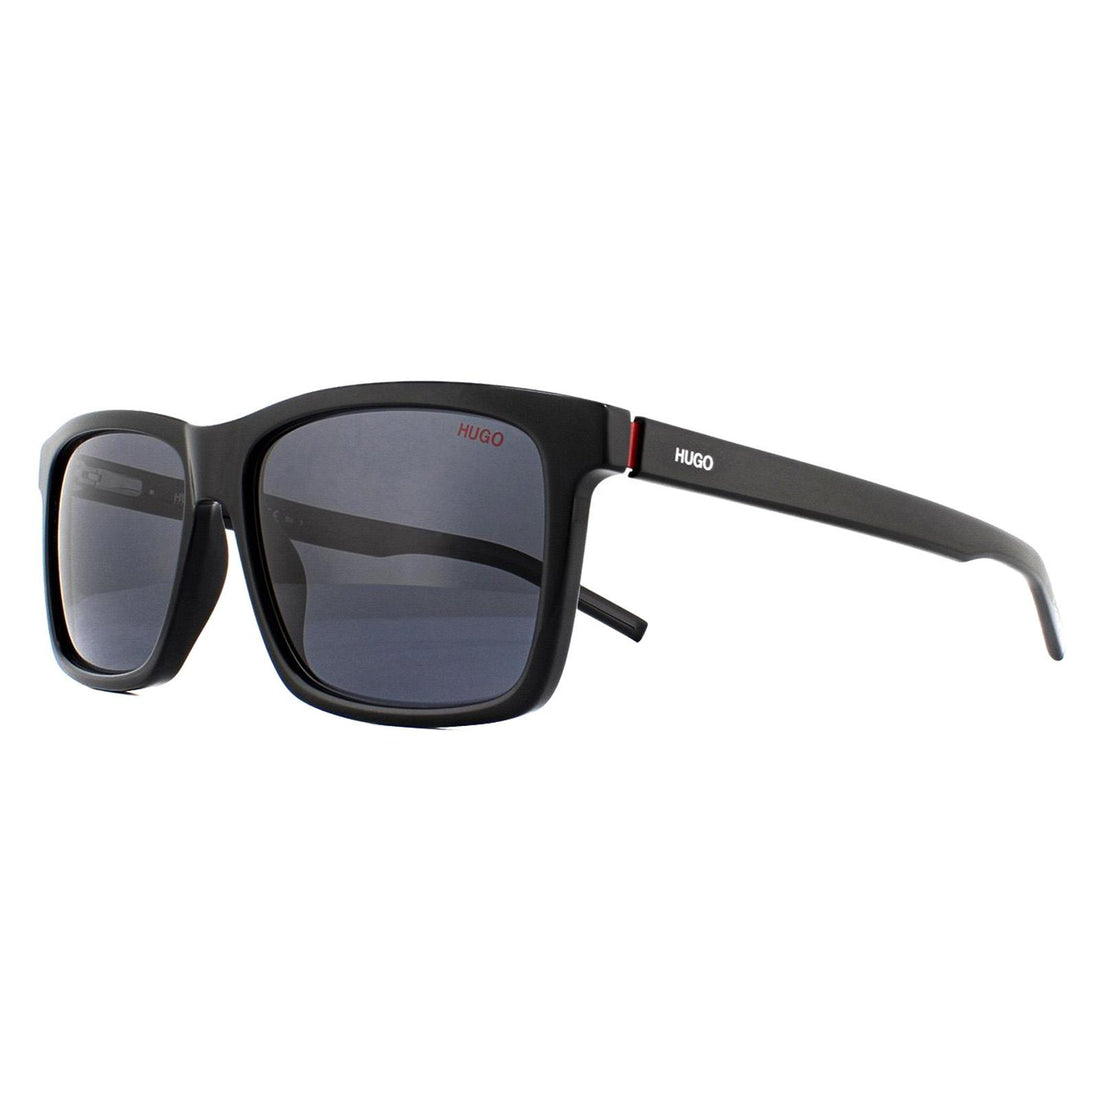 Hugo by Hugo Boss Sunglasses HG 1013/S OIT IR Black Grey